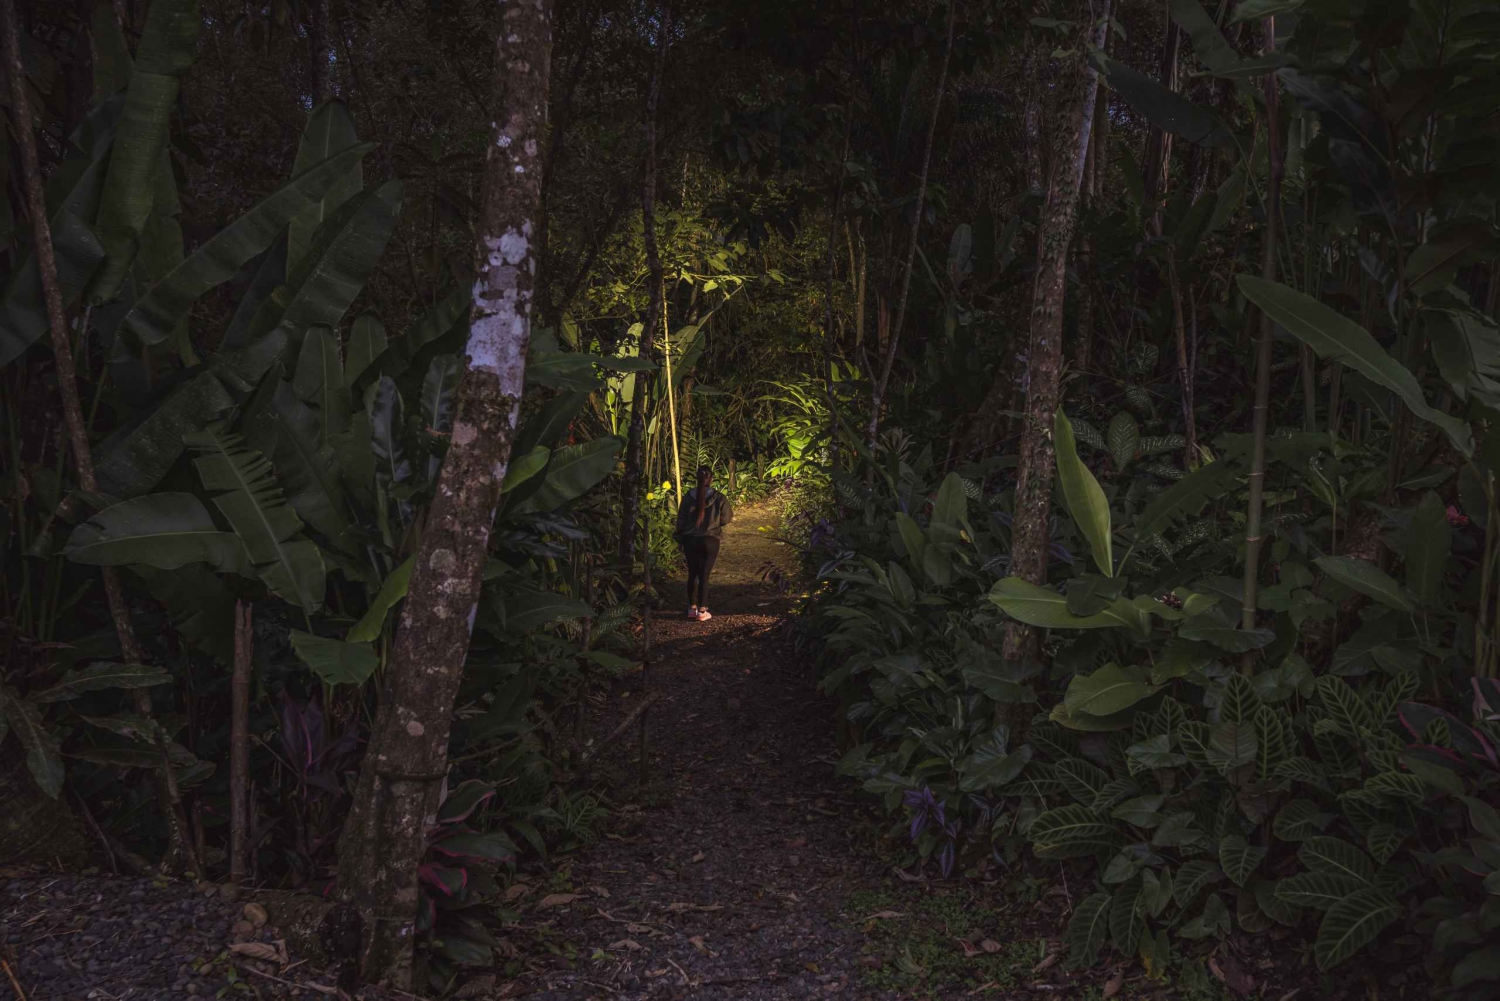 La Fortuna Arenal: Caminhada noturna na floresta tropical .